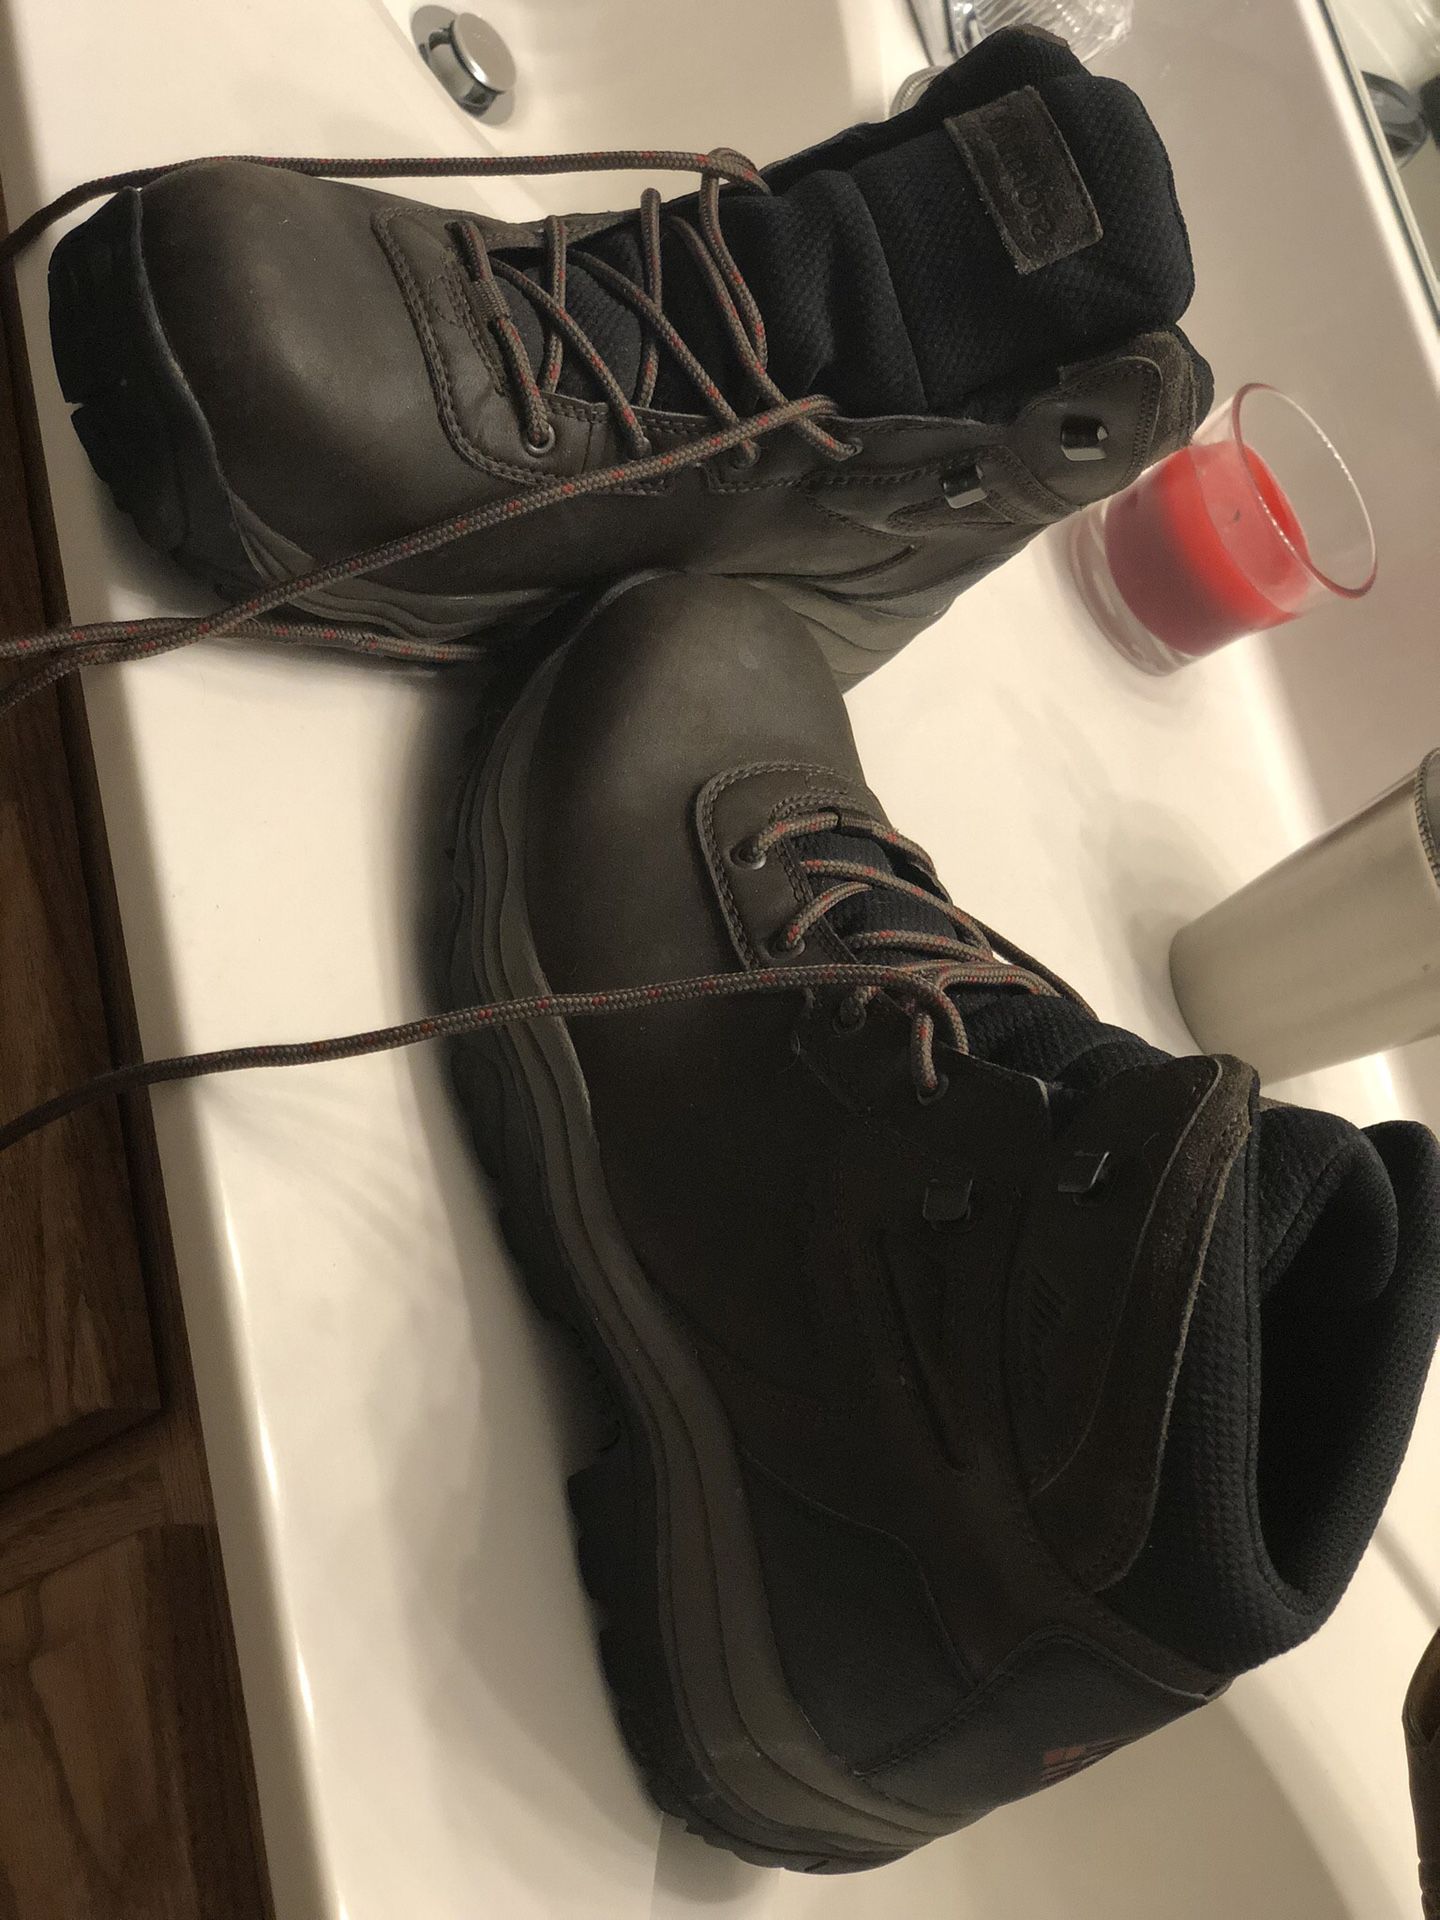 Men’s size 11 Columbia dress boots